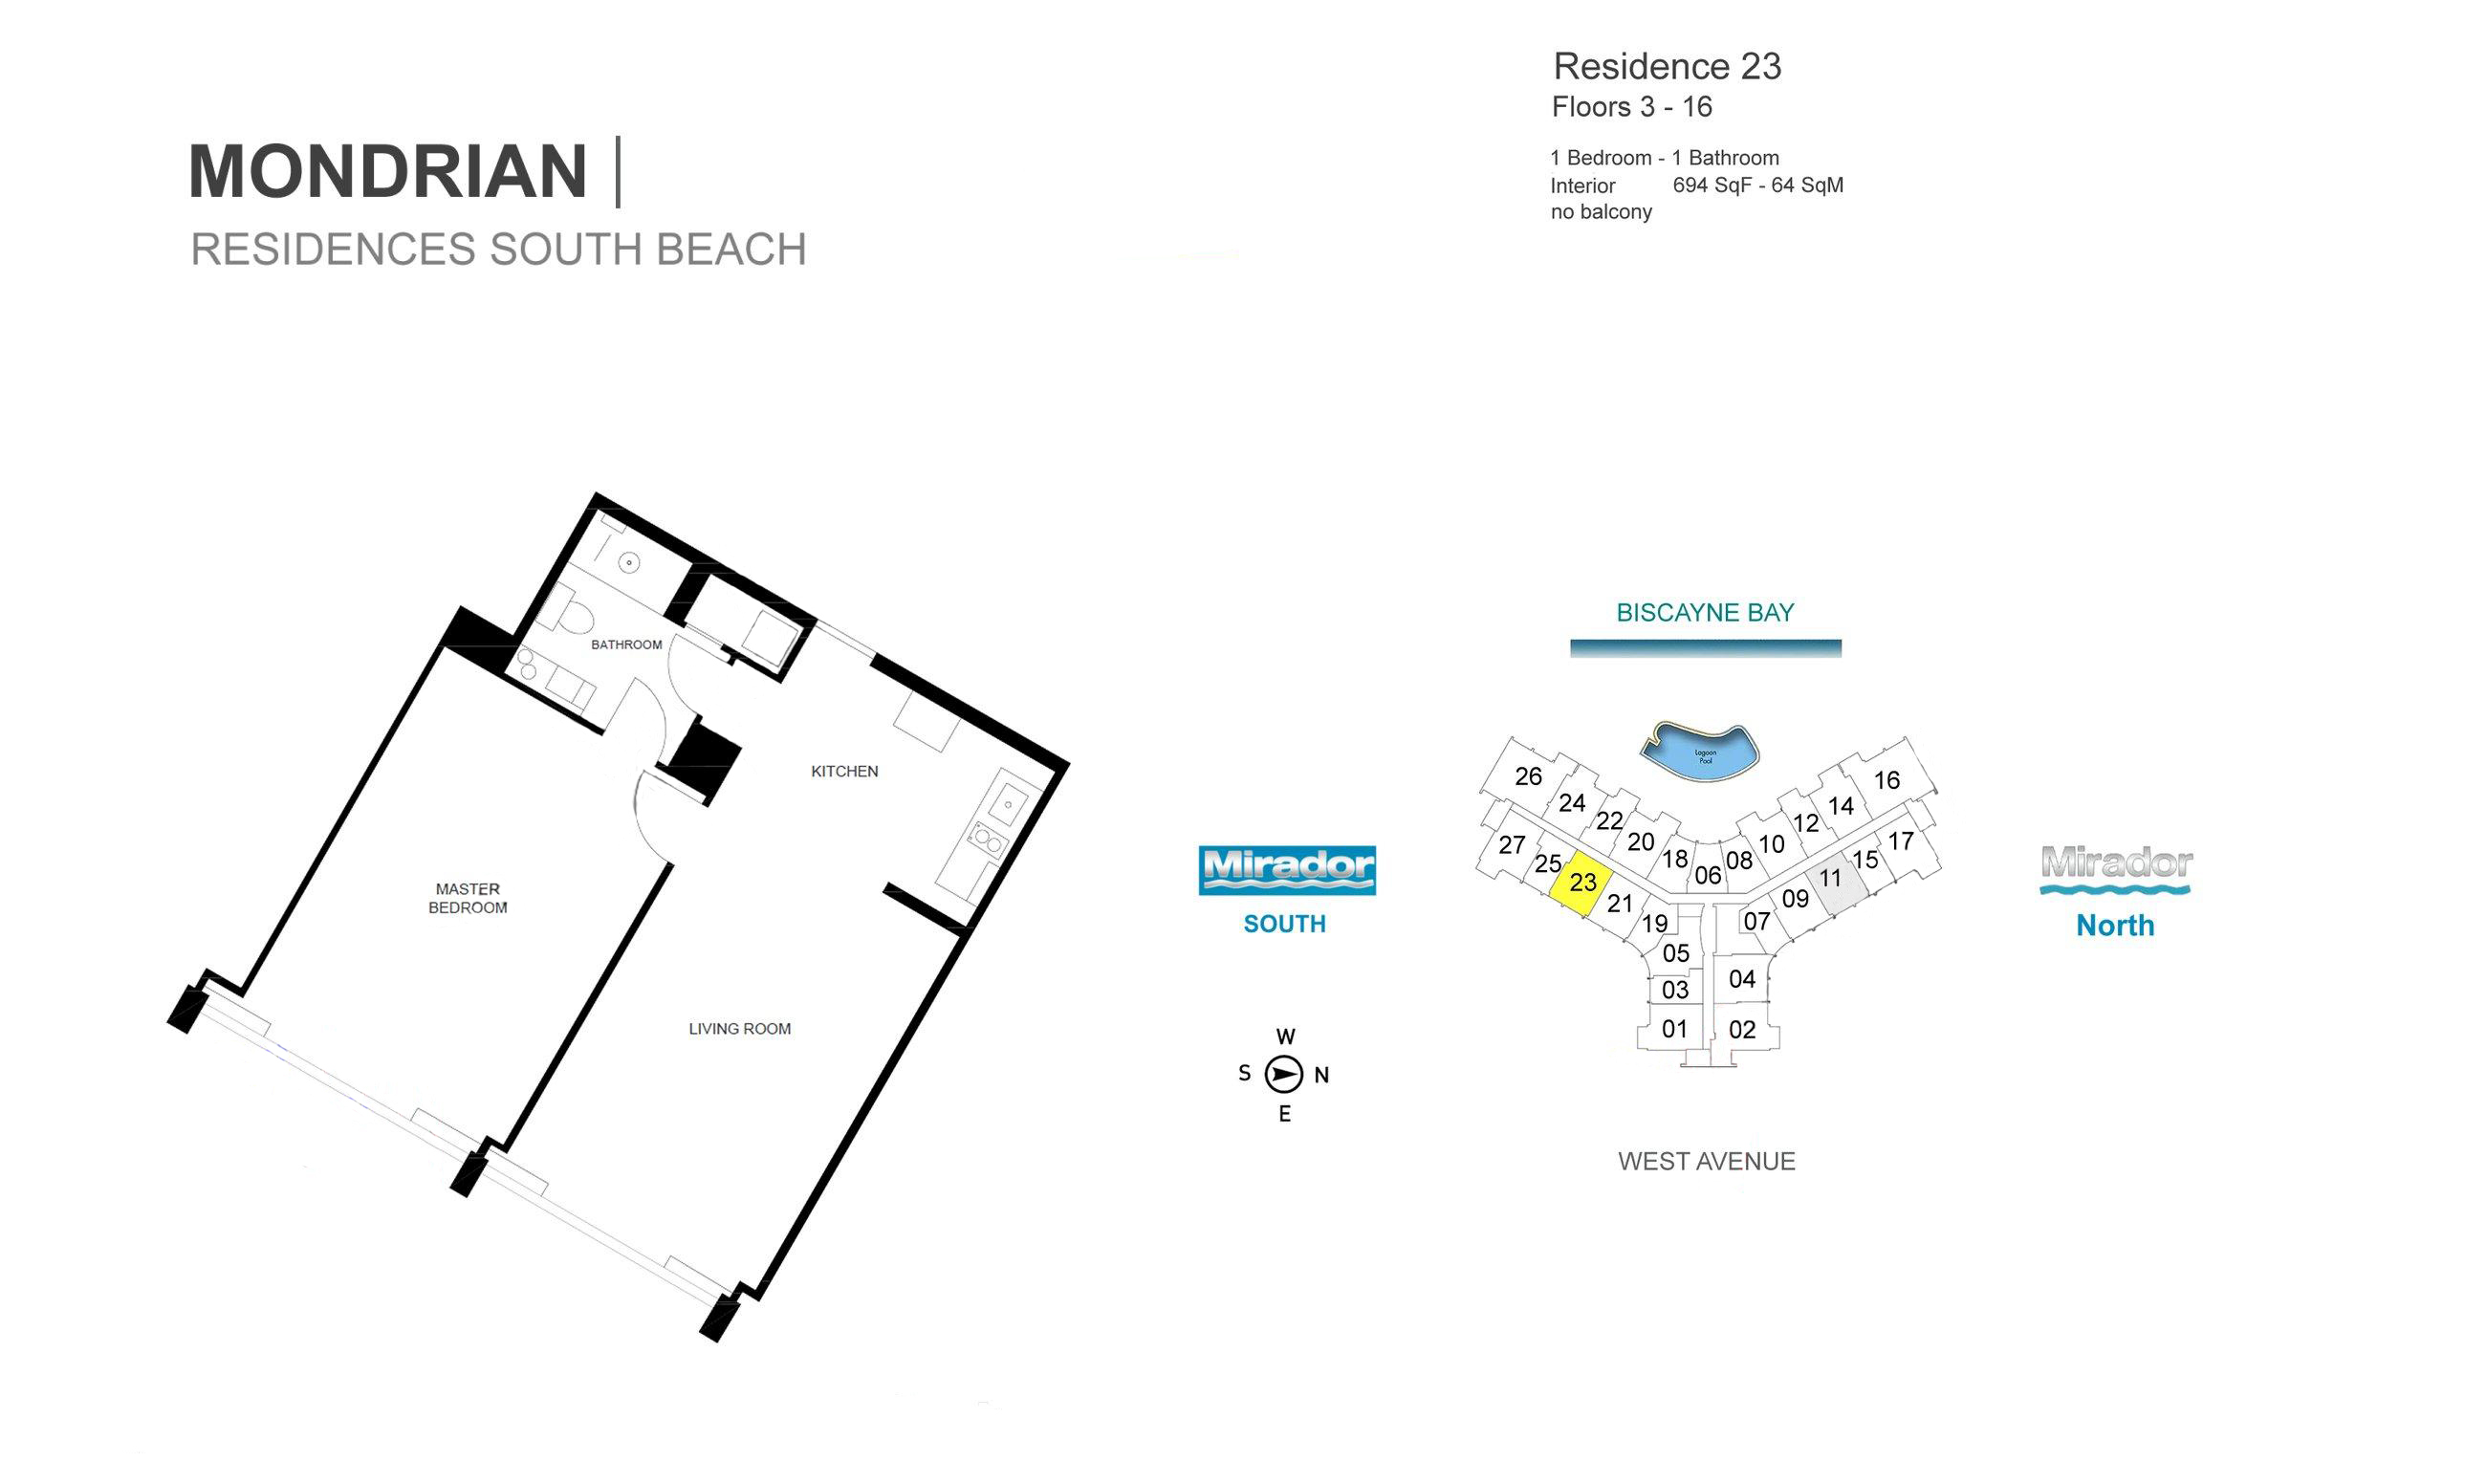 Mondrian South Beach Residence 23